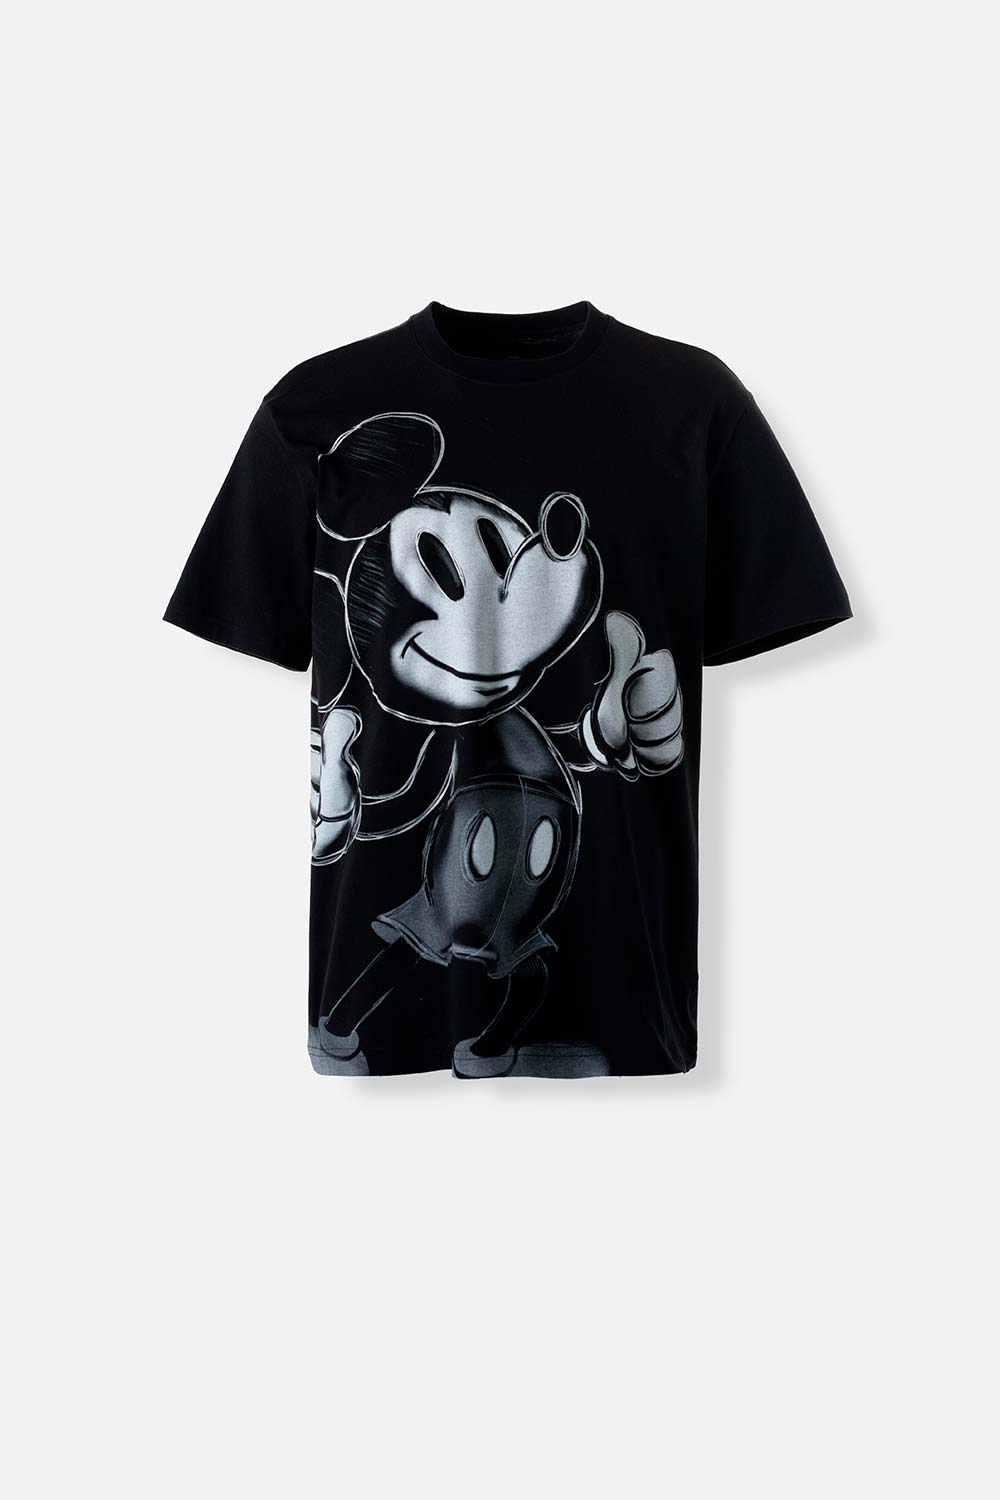 Camiseta de Disney 100TH negra manga corta para hombre S-0